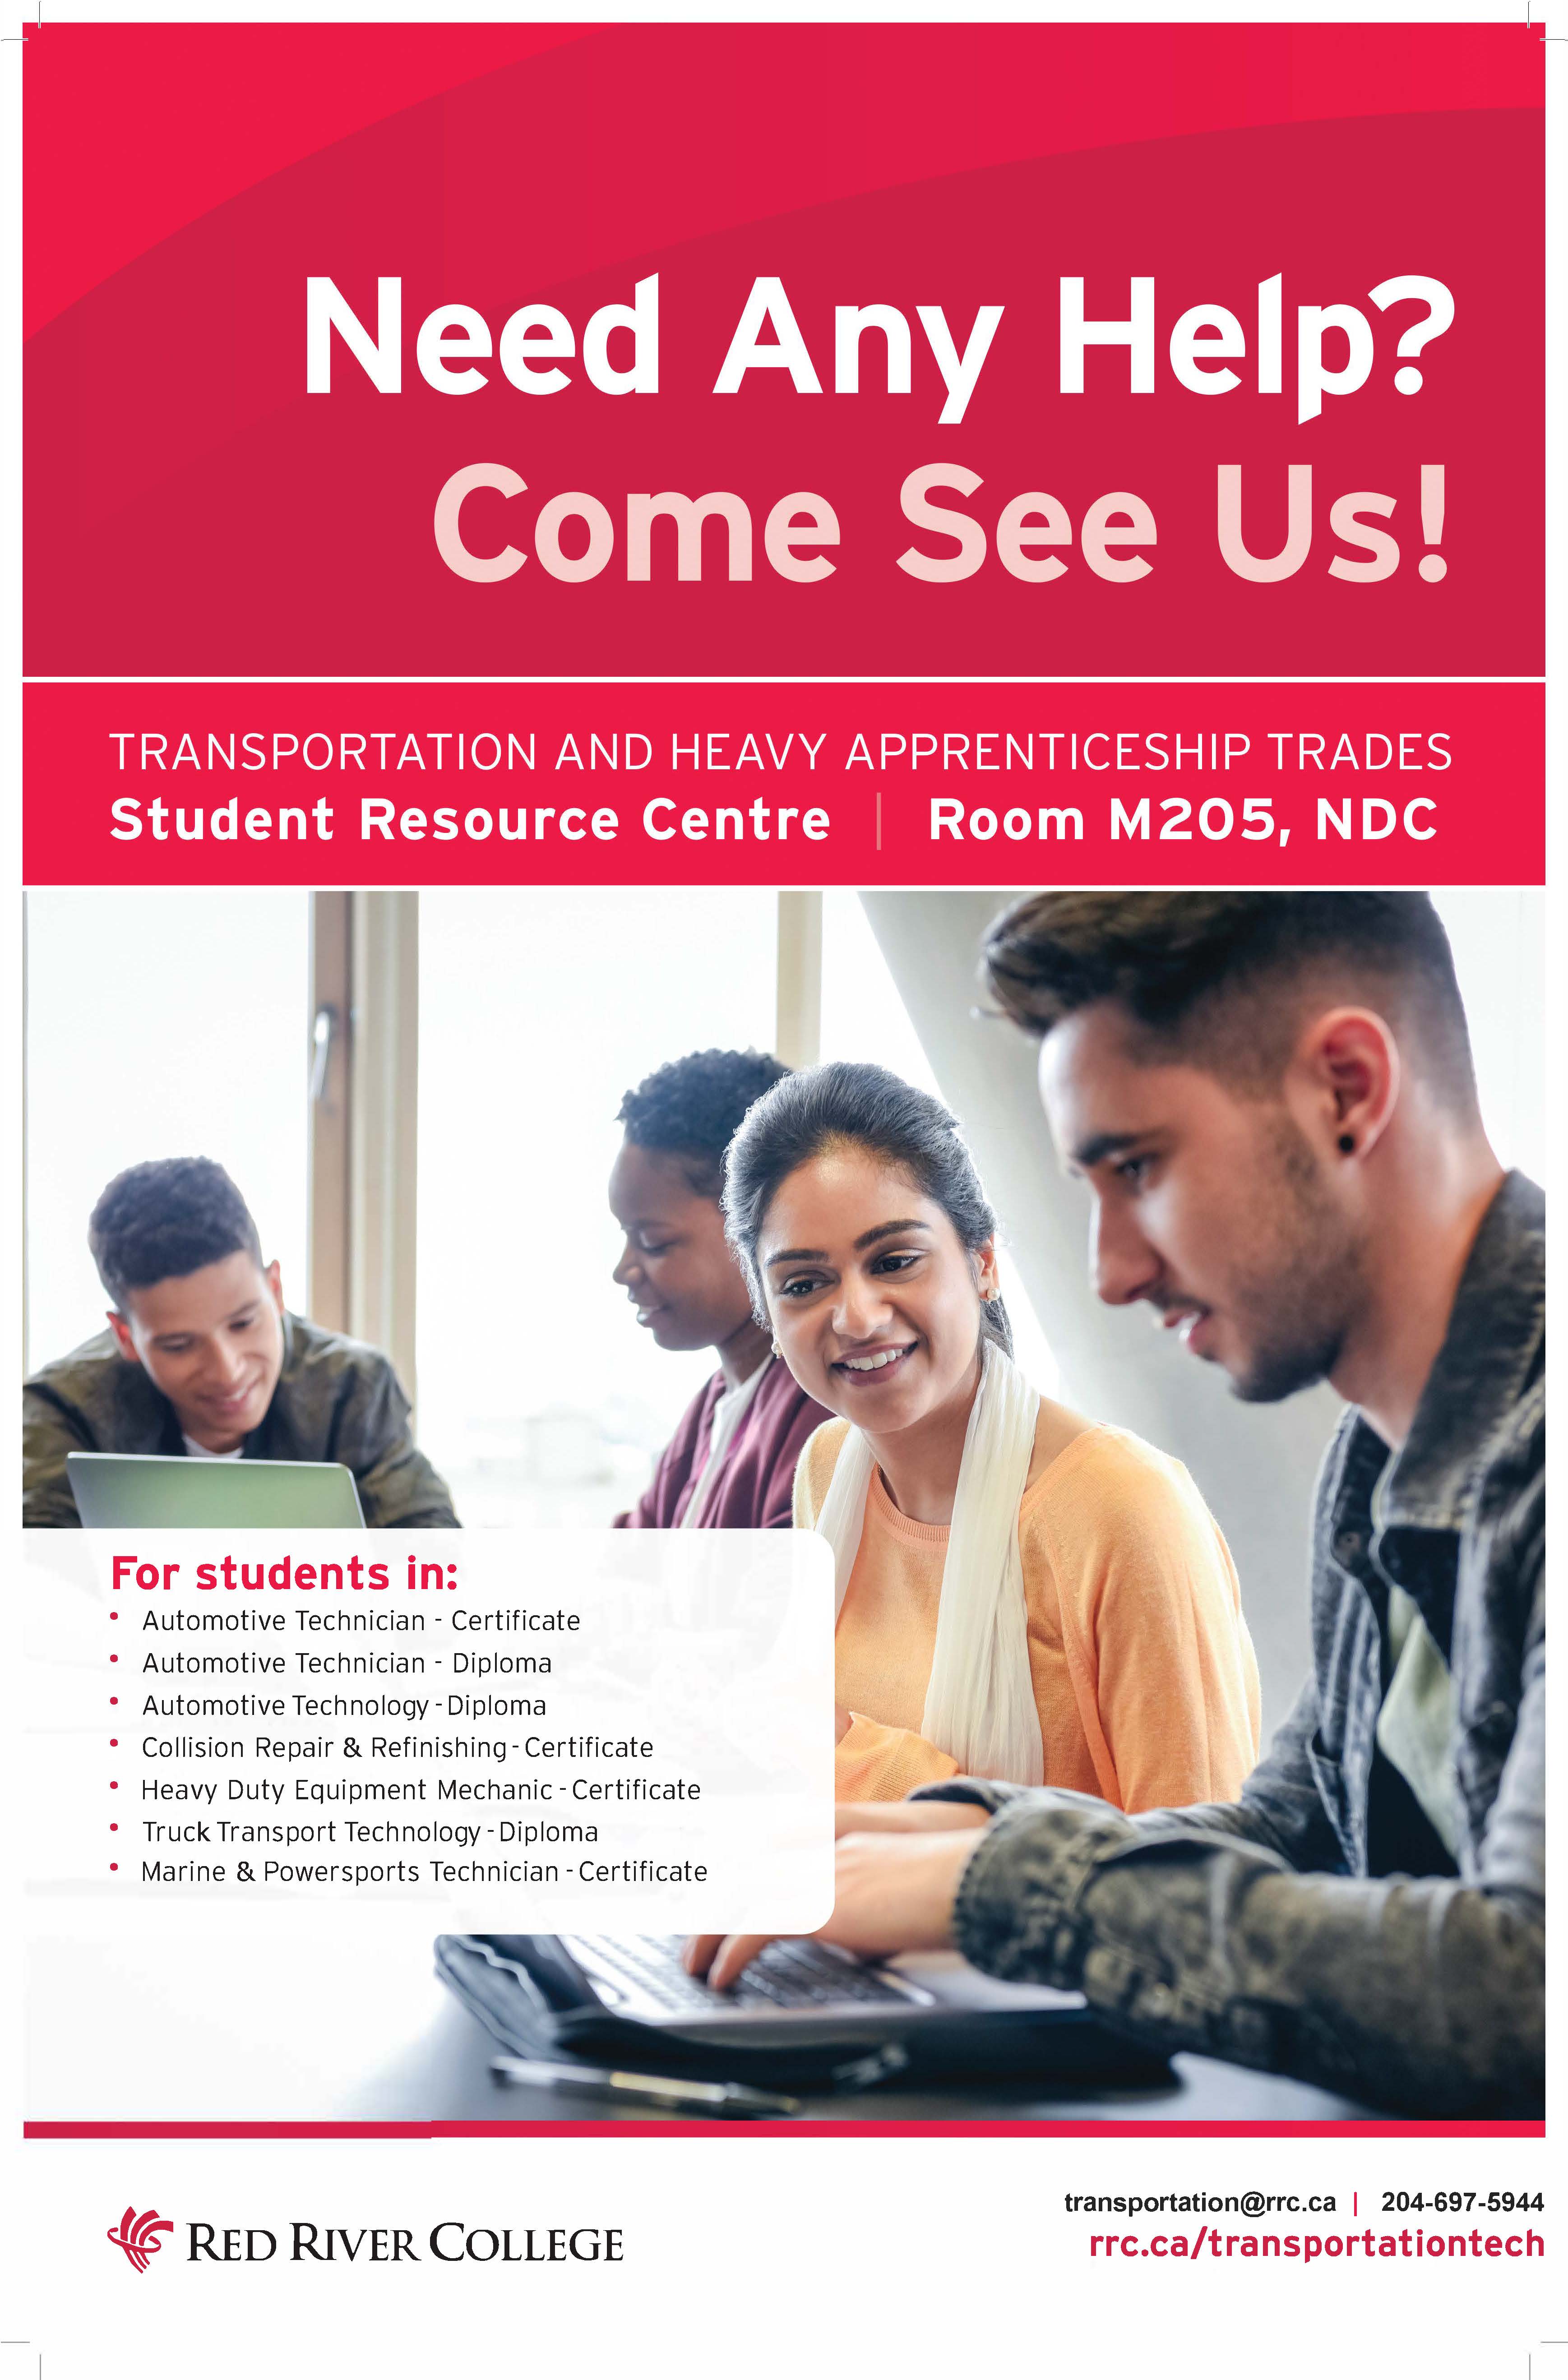 Transportation Student Resource Centre Poster - 11x17 - Rougenta Print (002).jpg